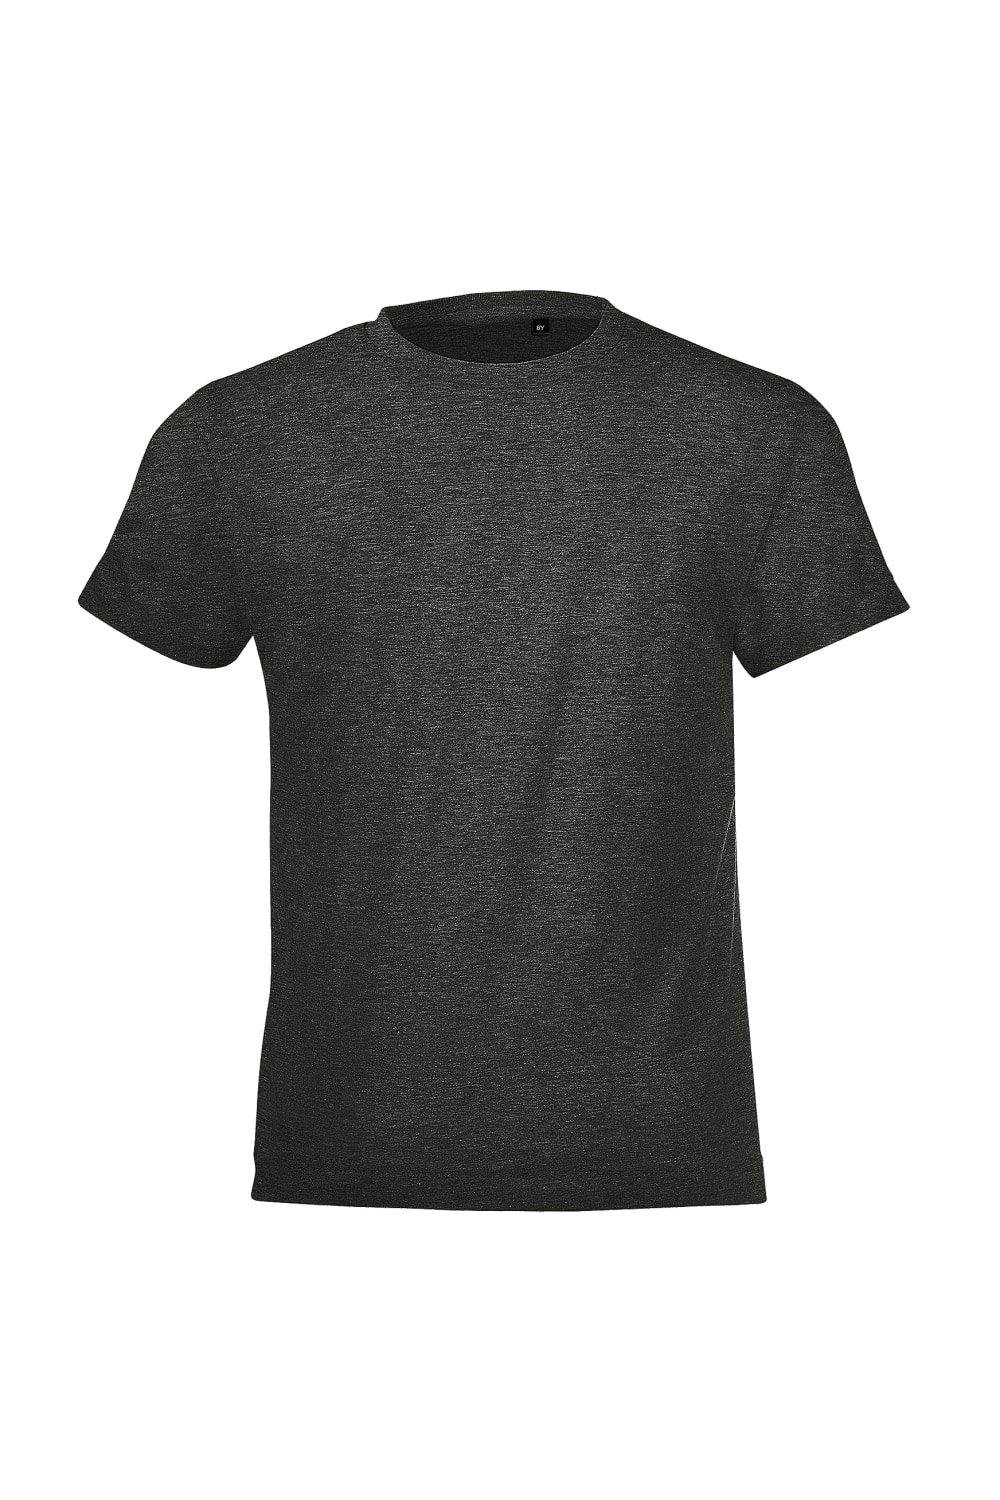 Regent Short Sleeve Fitted T-Shirt